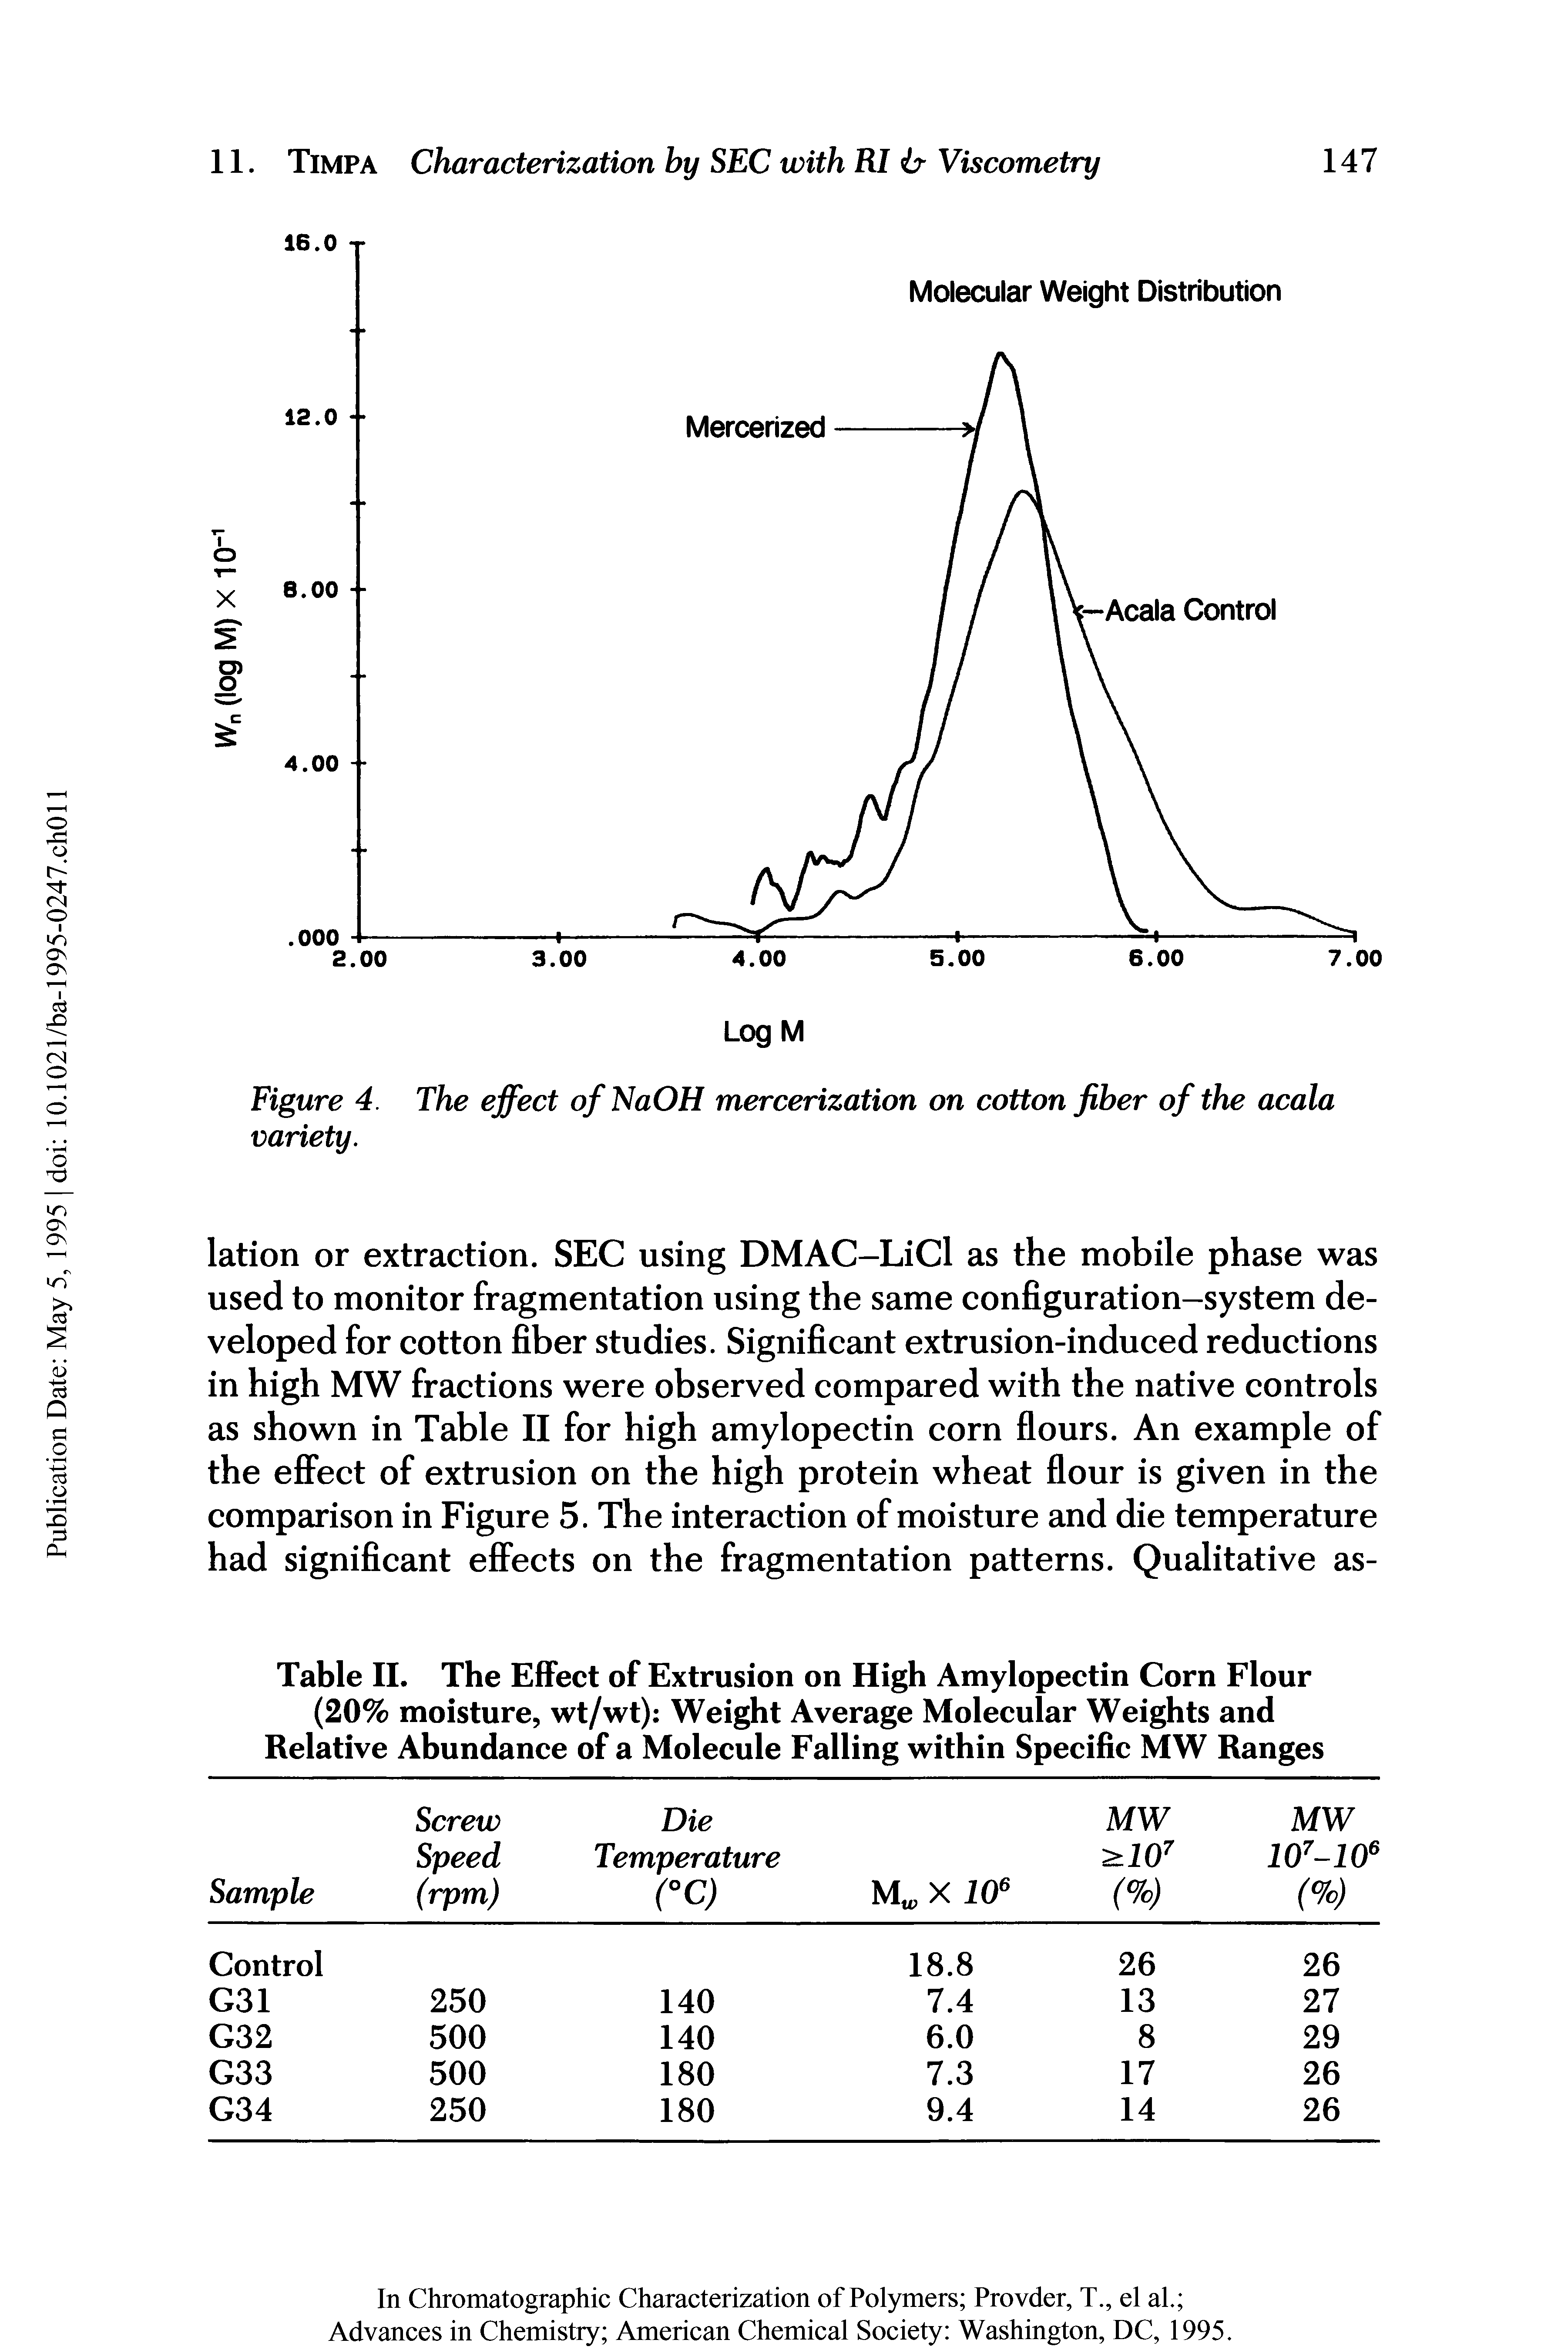 Figure 4. The effect ofNaOH mercerization on cotton fiber of the acala variety.